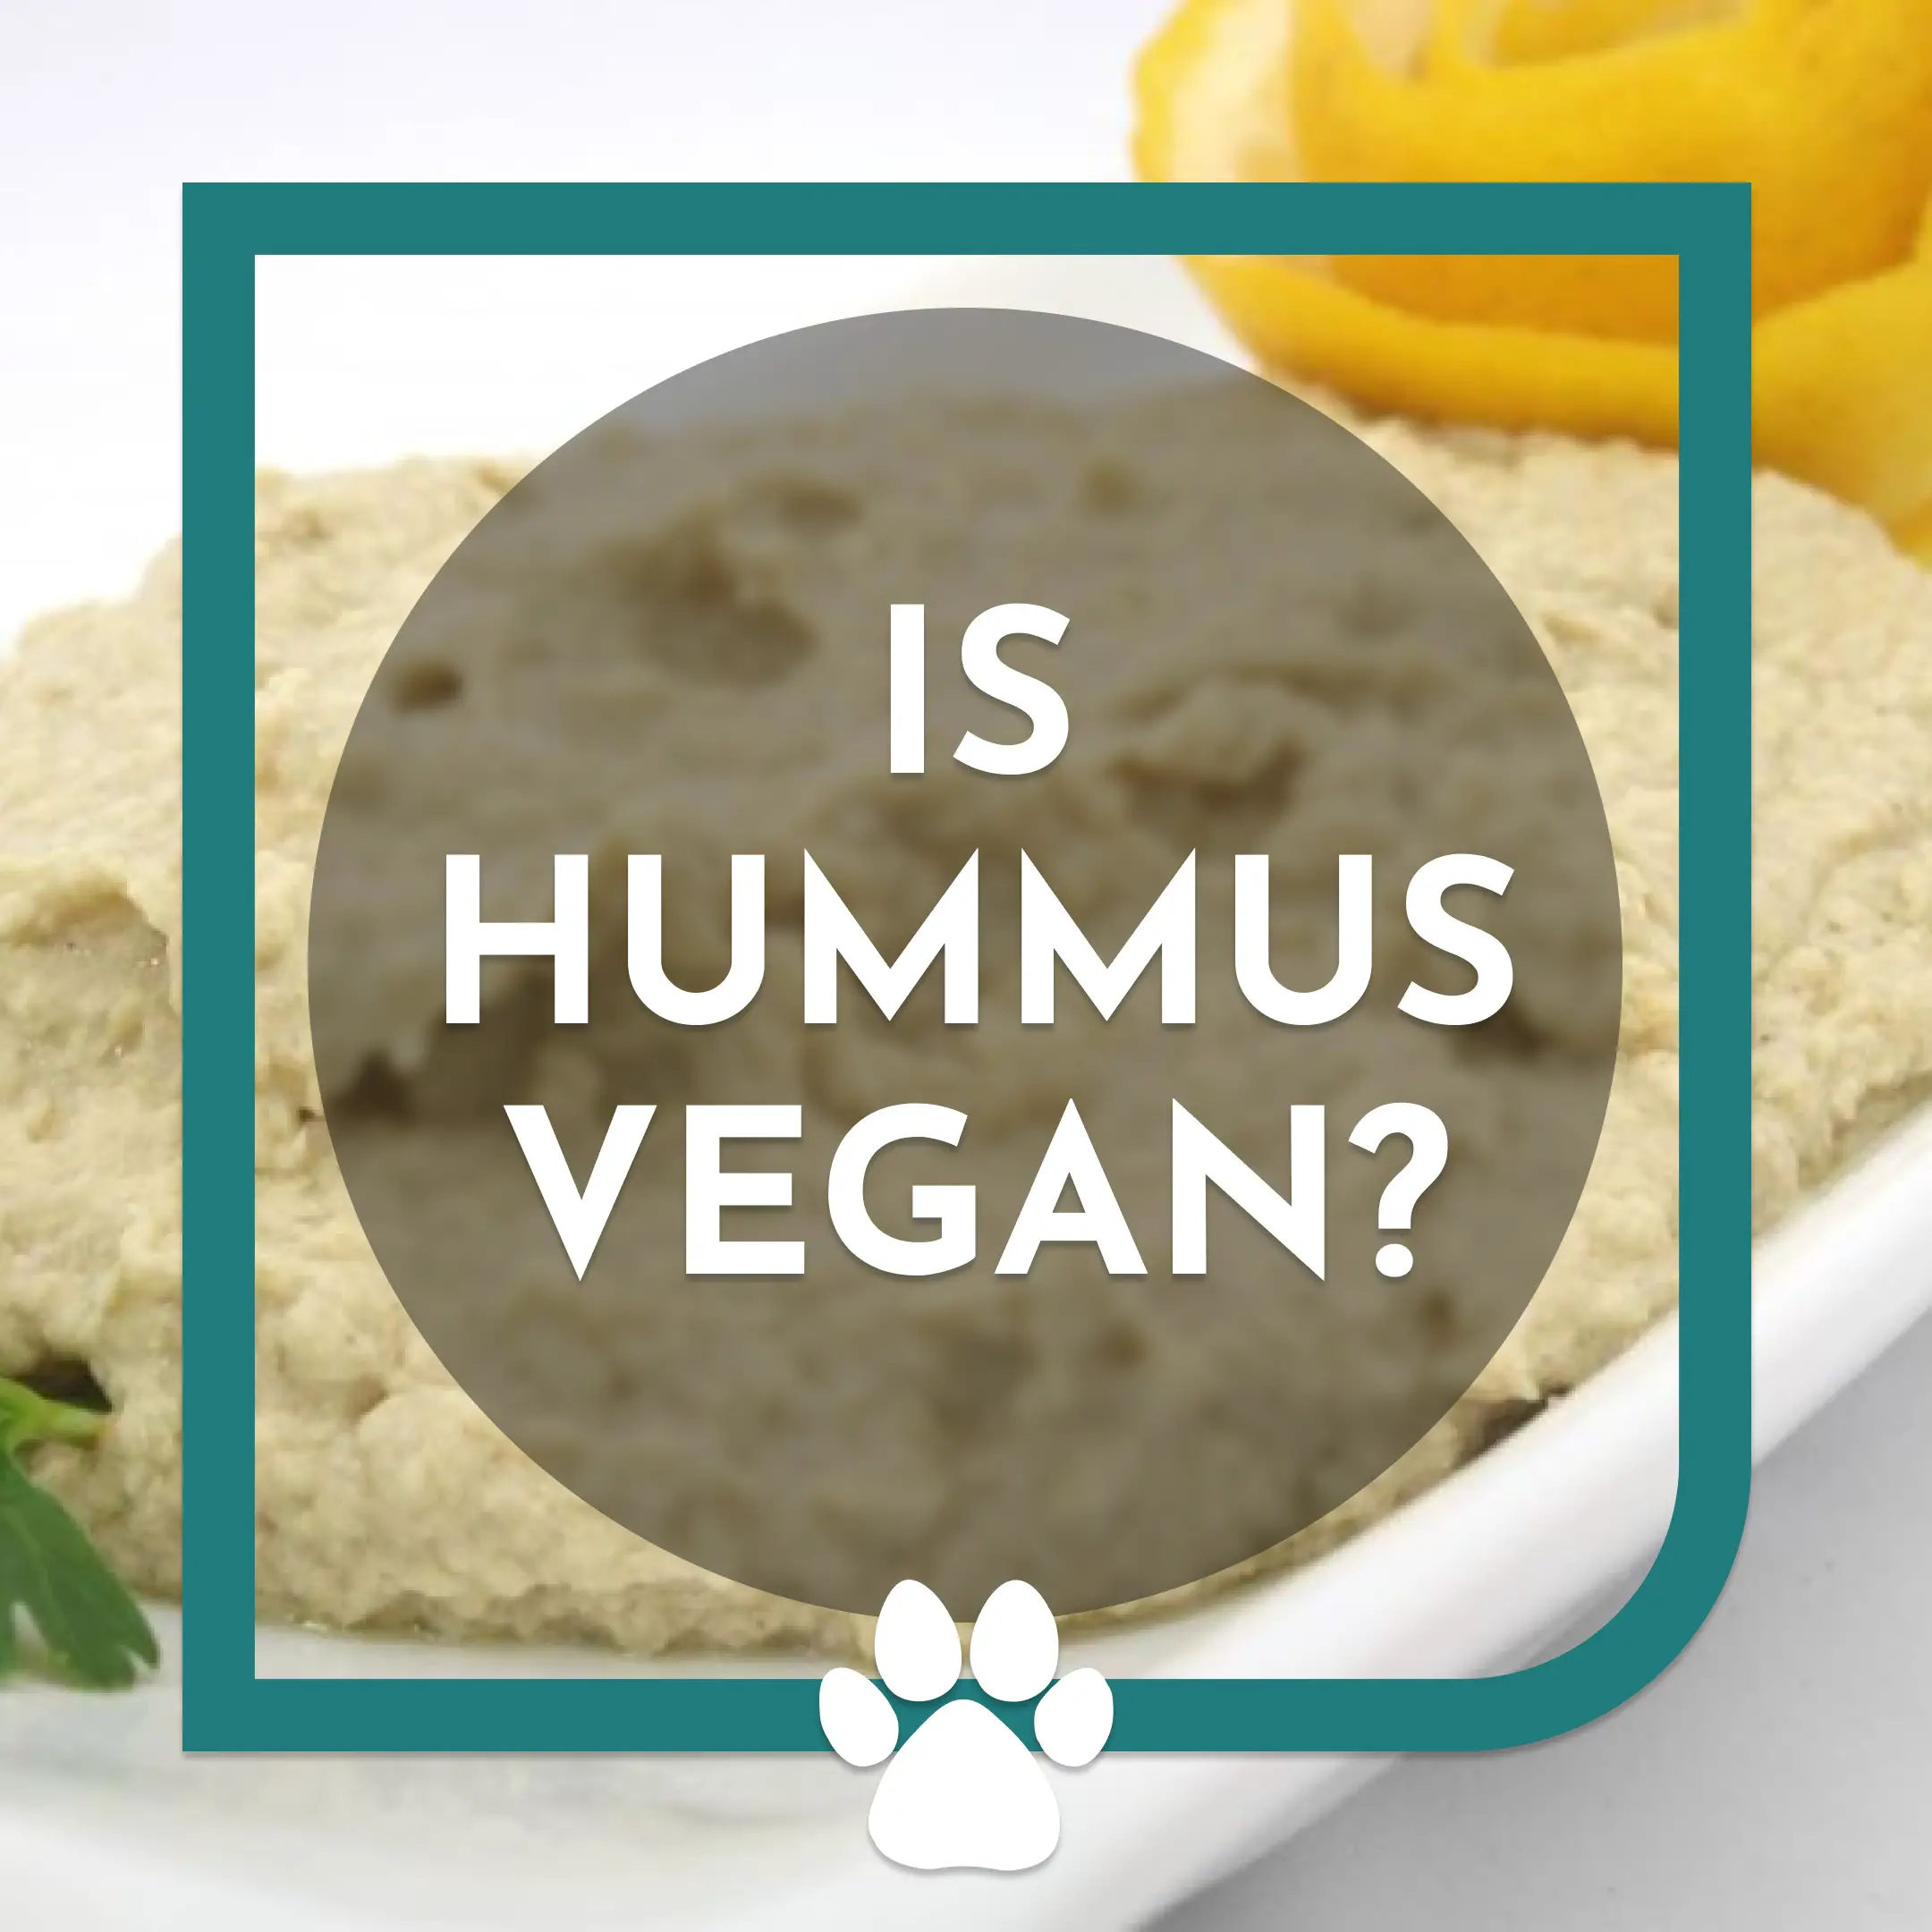 Is Hummus vegan? Let’s talk about it!